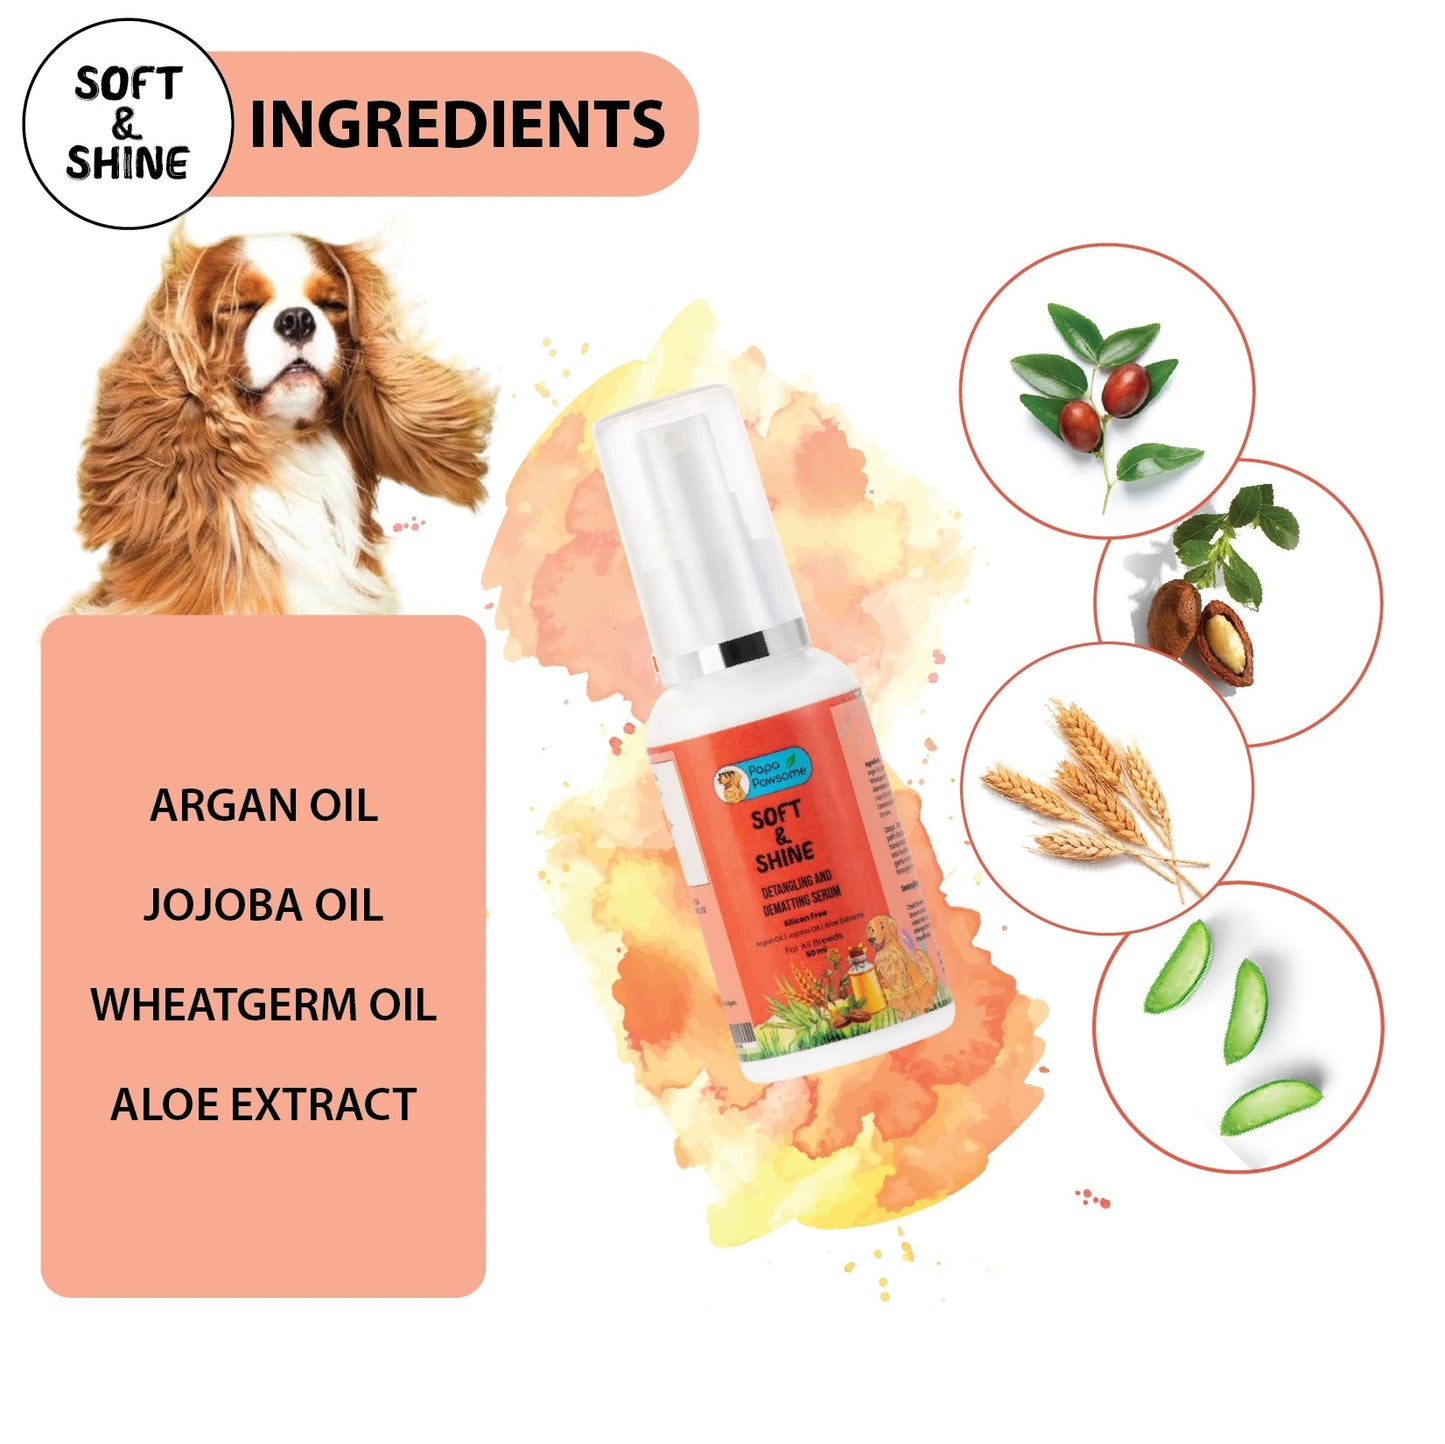 Ingredients: Argan Oil, Jojoba Oil, Aloe Vera Extract, and Wheatgerm Oil. Emogreen (C 15-19 Alkane, Plant Derived Alternative to Silicones)